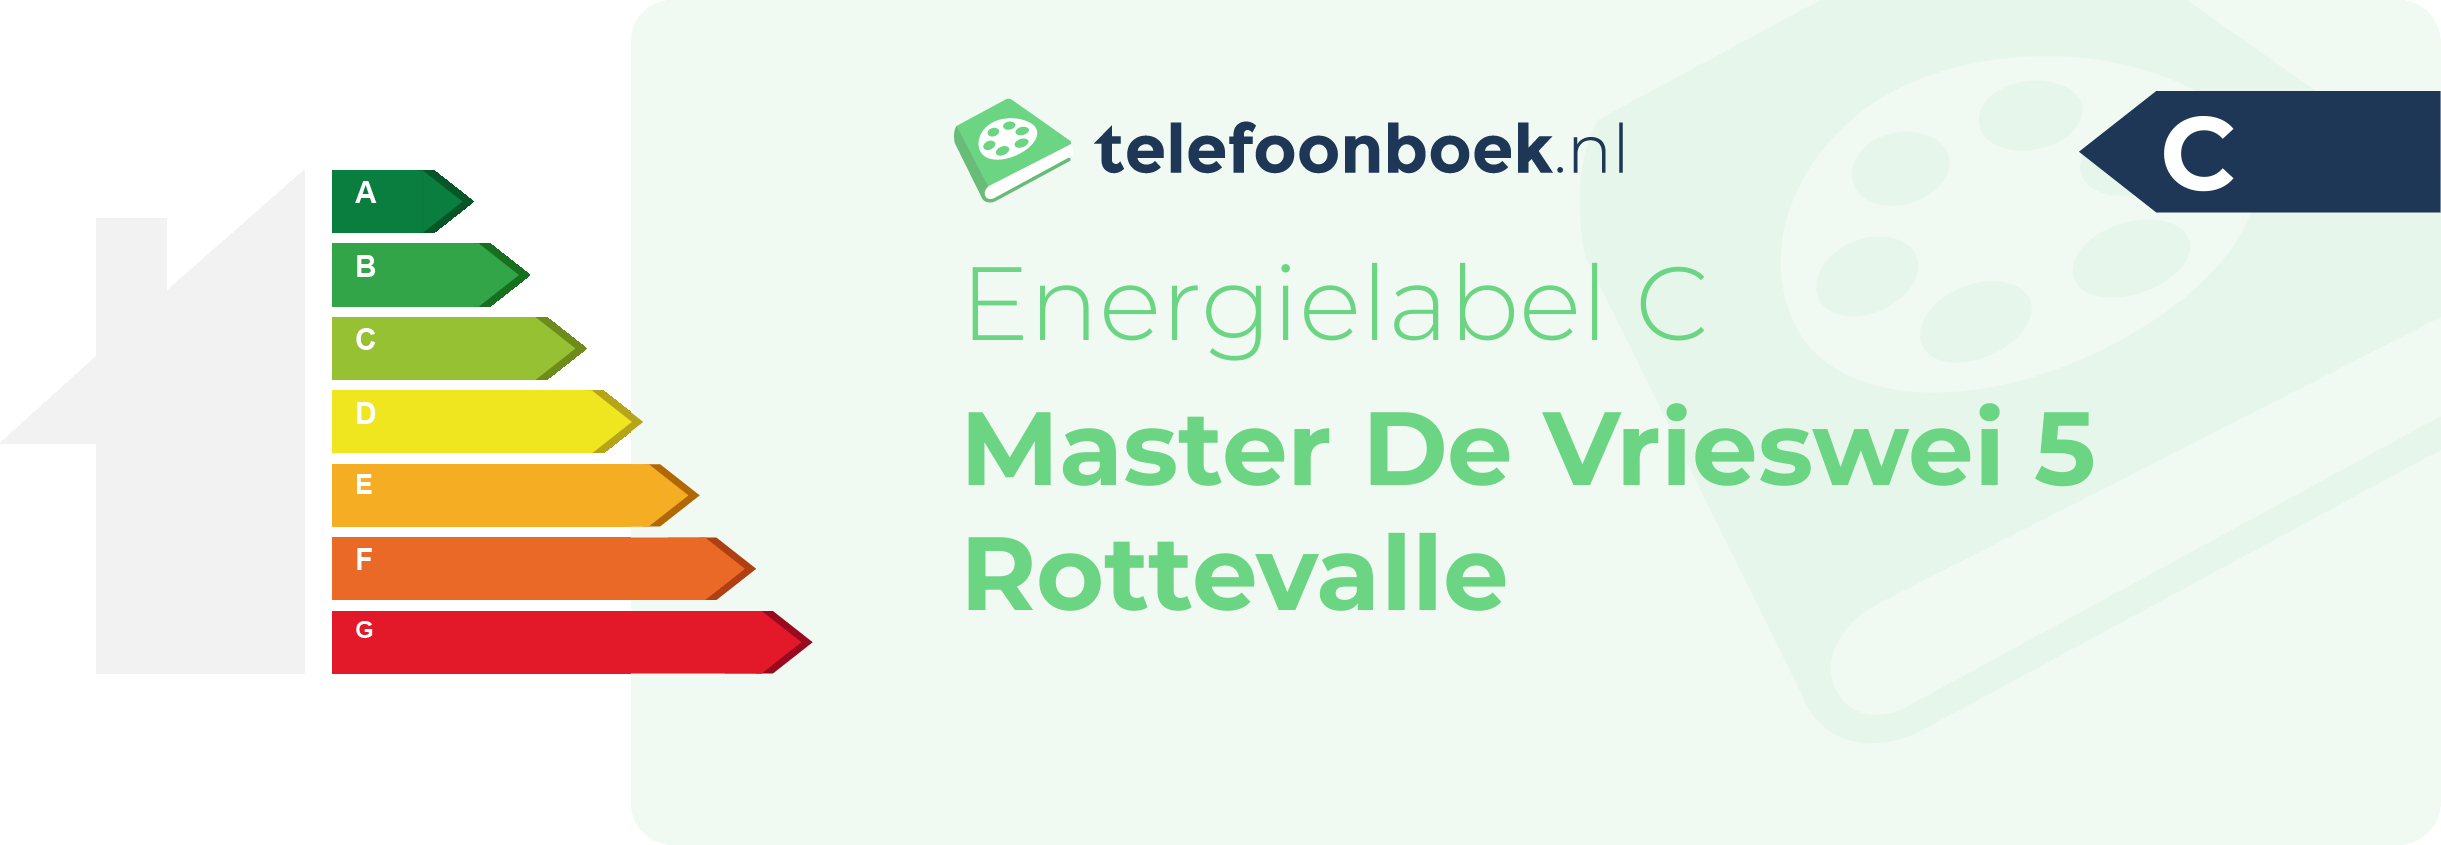 Energielabel Master De Vrieswei 5 Rottevalle